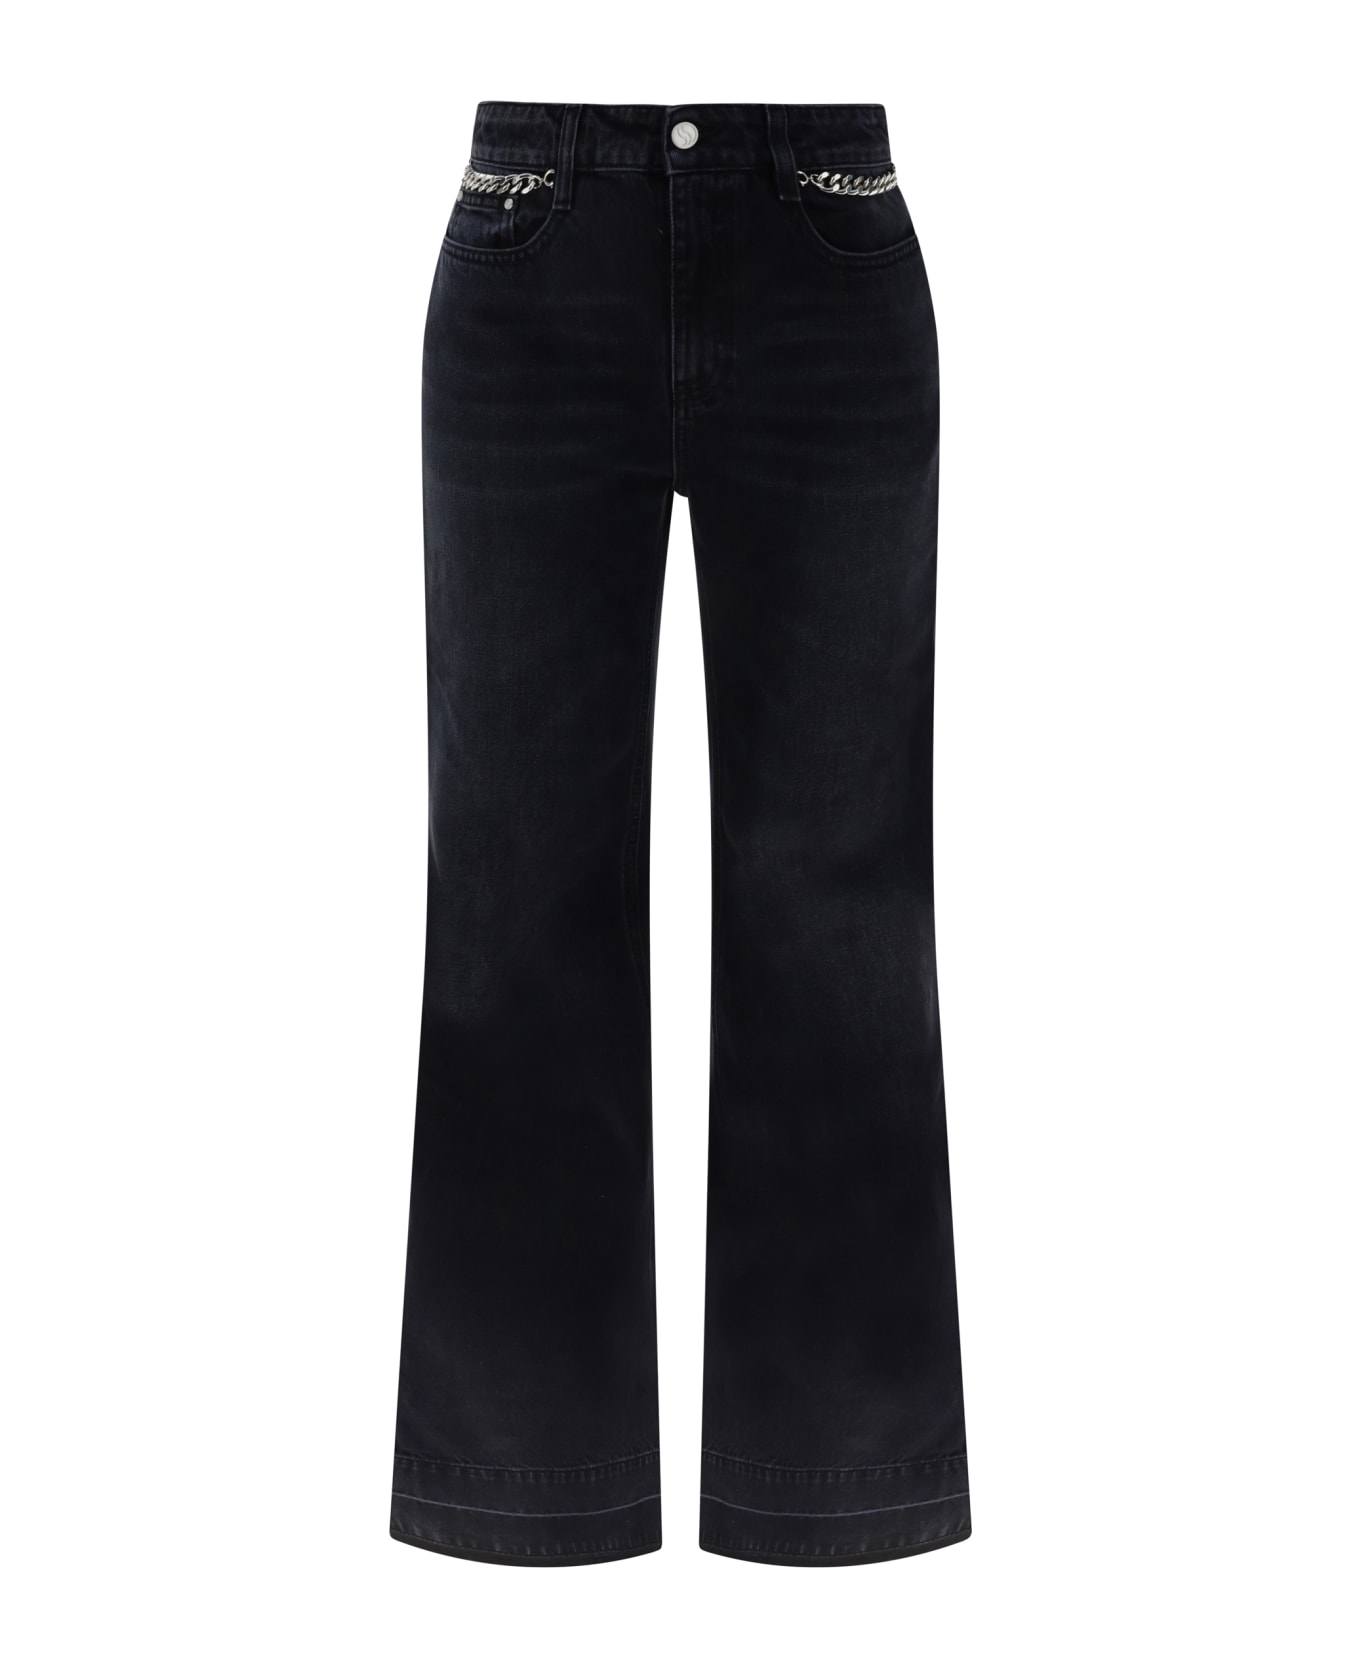 Stella McCartney Falabella 70's Jeans - Black デニム